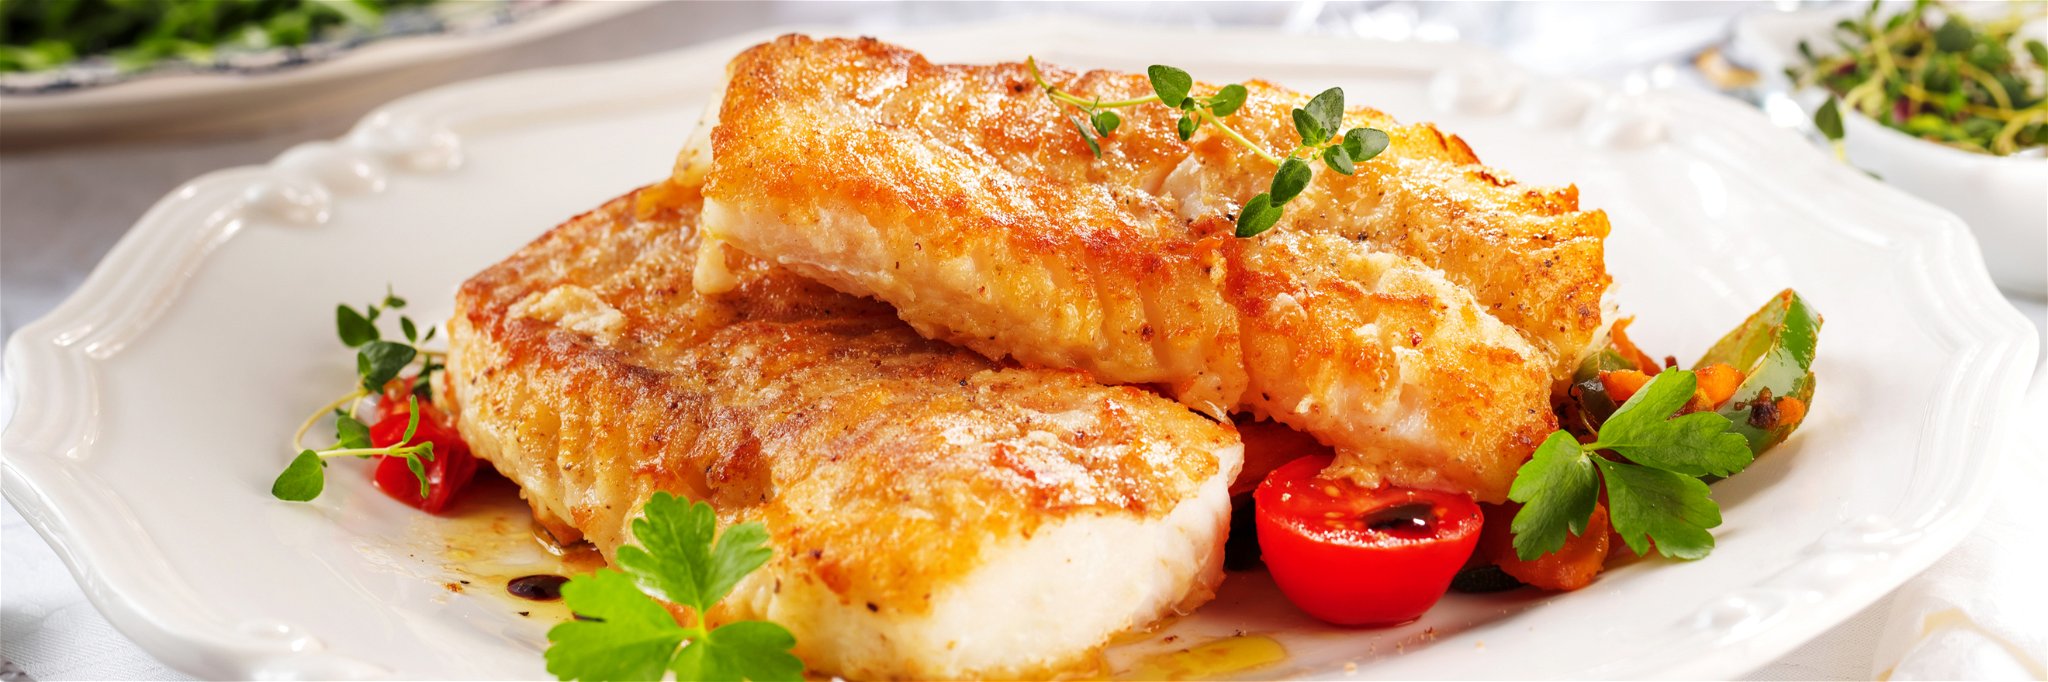 Fish recipes from around the globe.